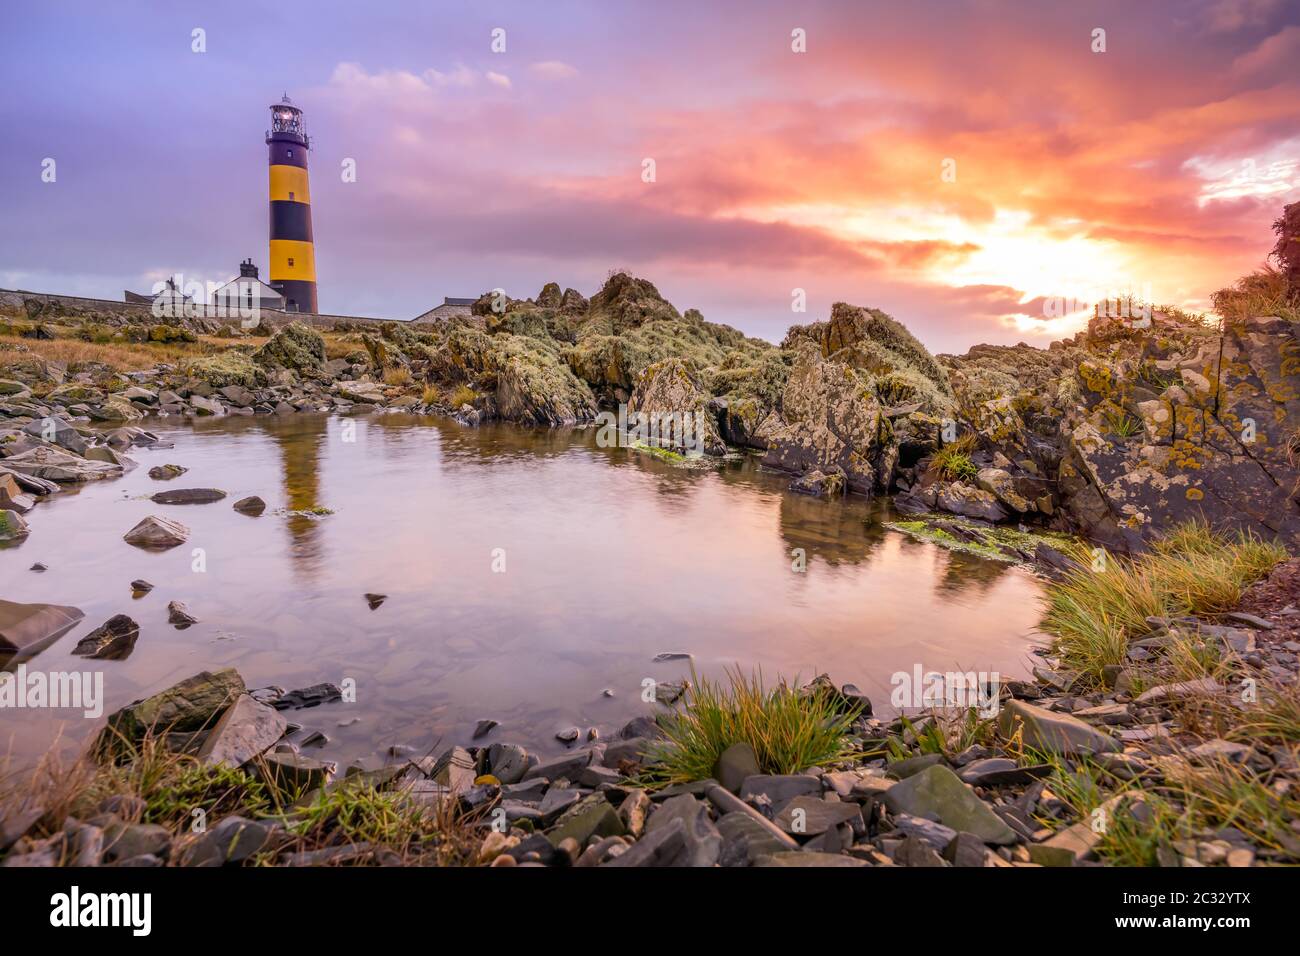 Amazing sunrise at St. Johns Point Lighthouse in Northern Ireland Stock Photo